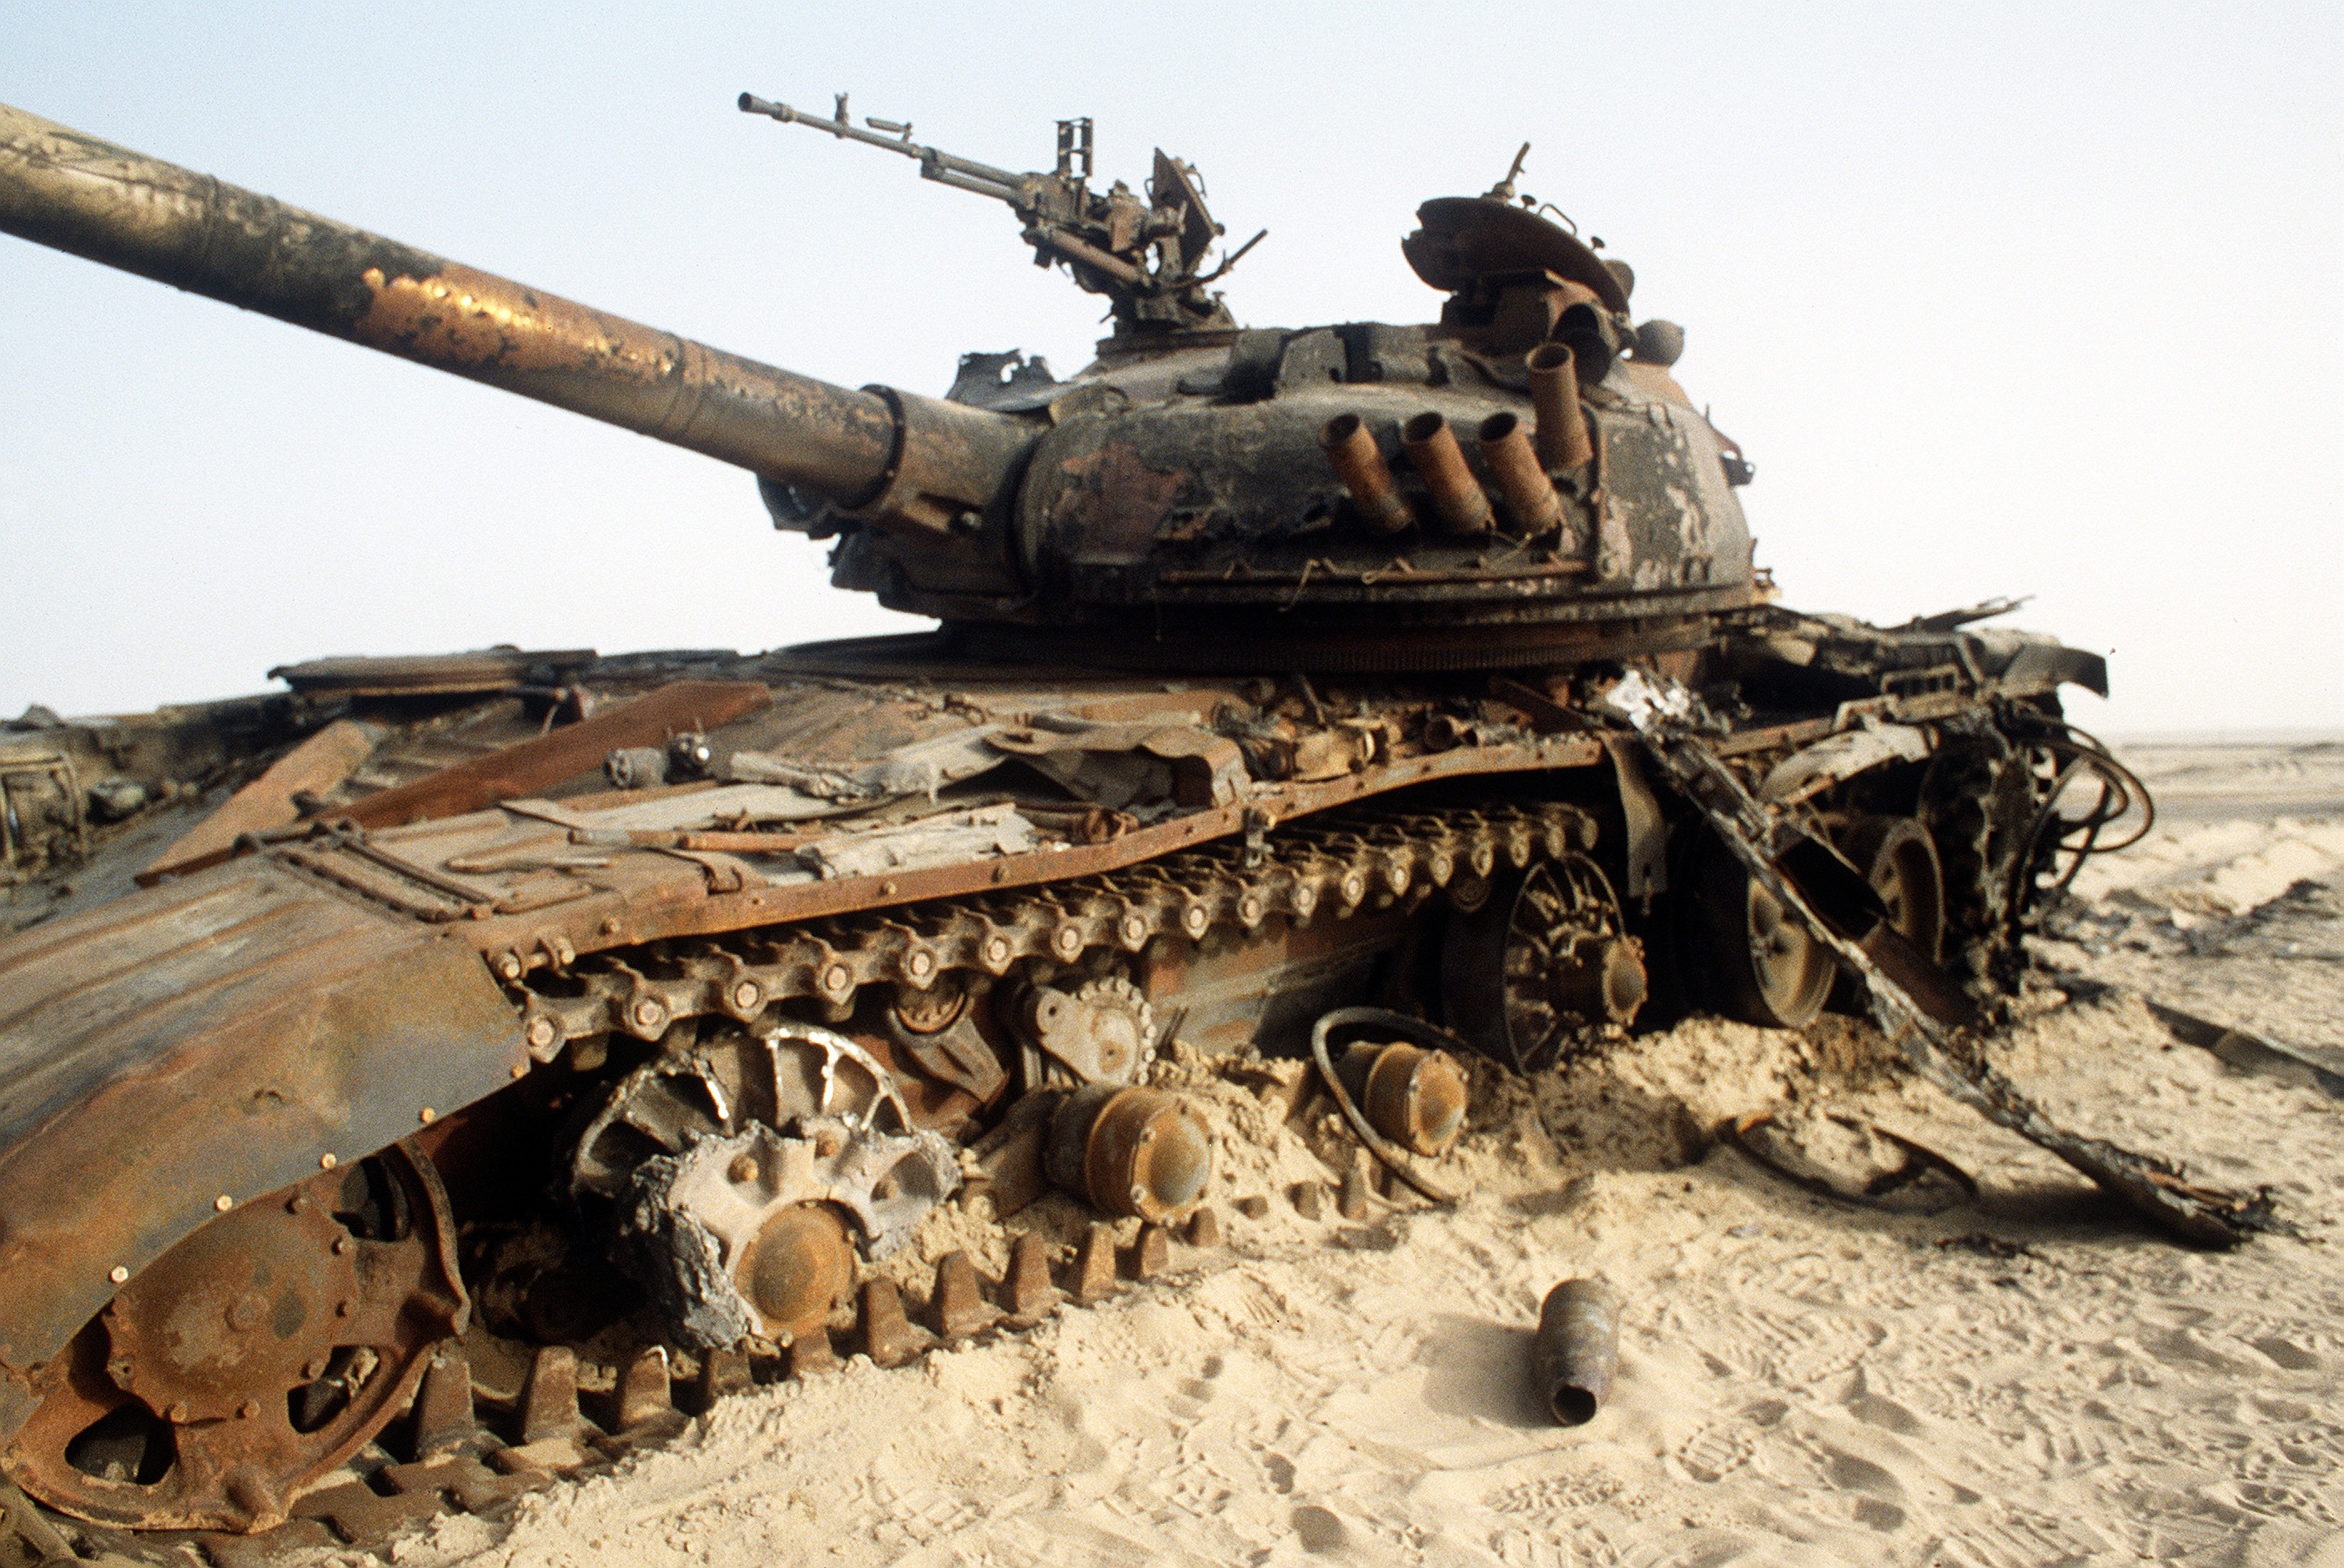 Destroyed_Iraqi_T-72_tank_during_the_Gulf_War.JPEG